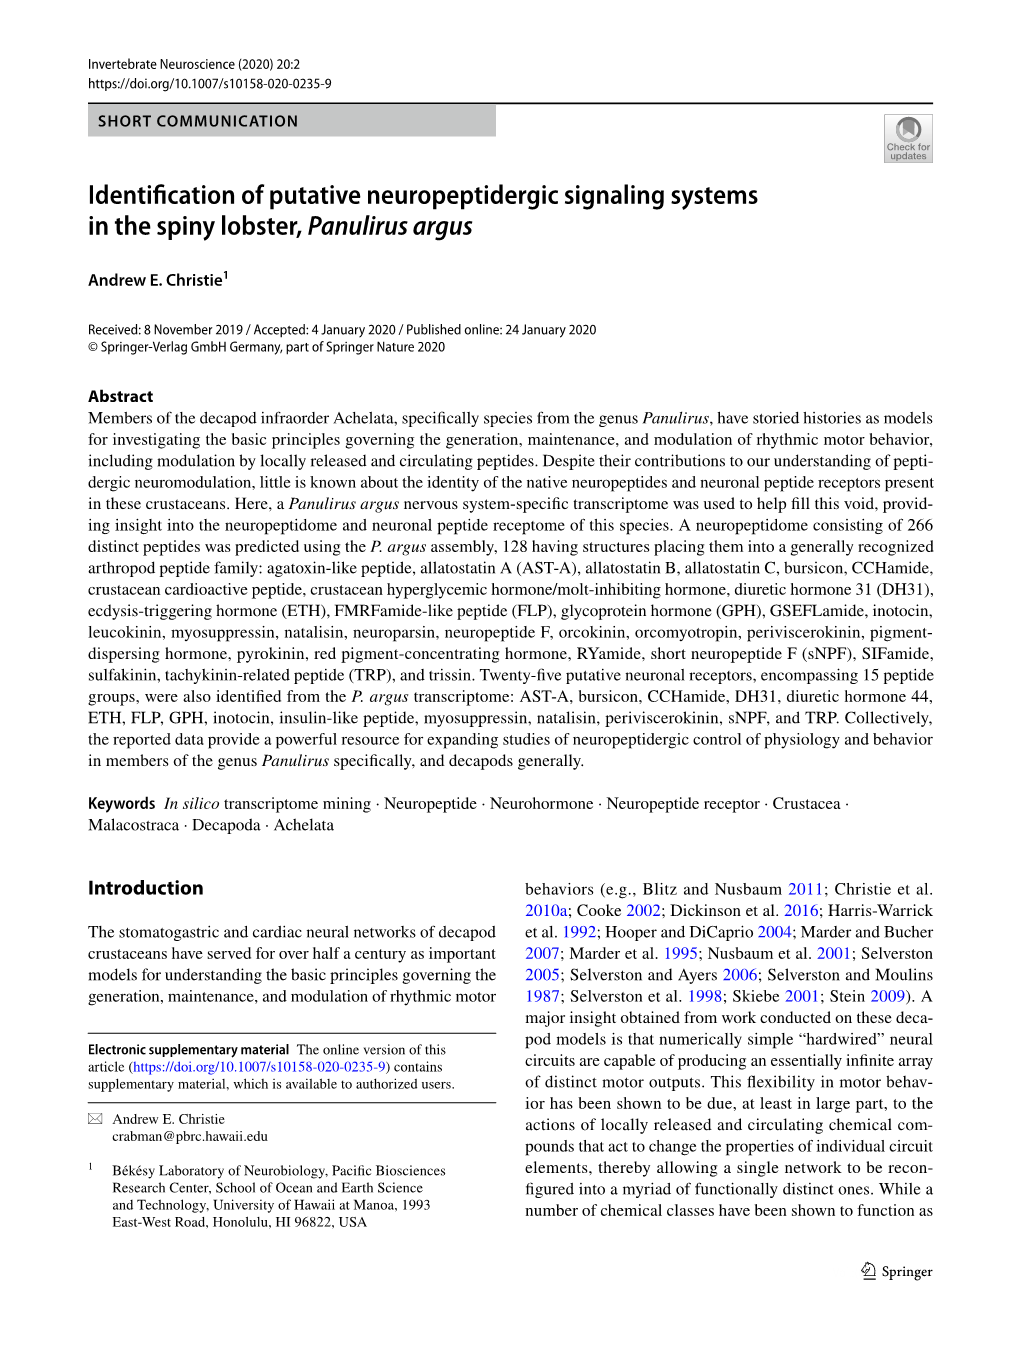 Identification of Putative Neuropeptidergic Signaling Systems